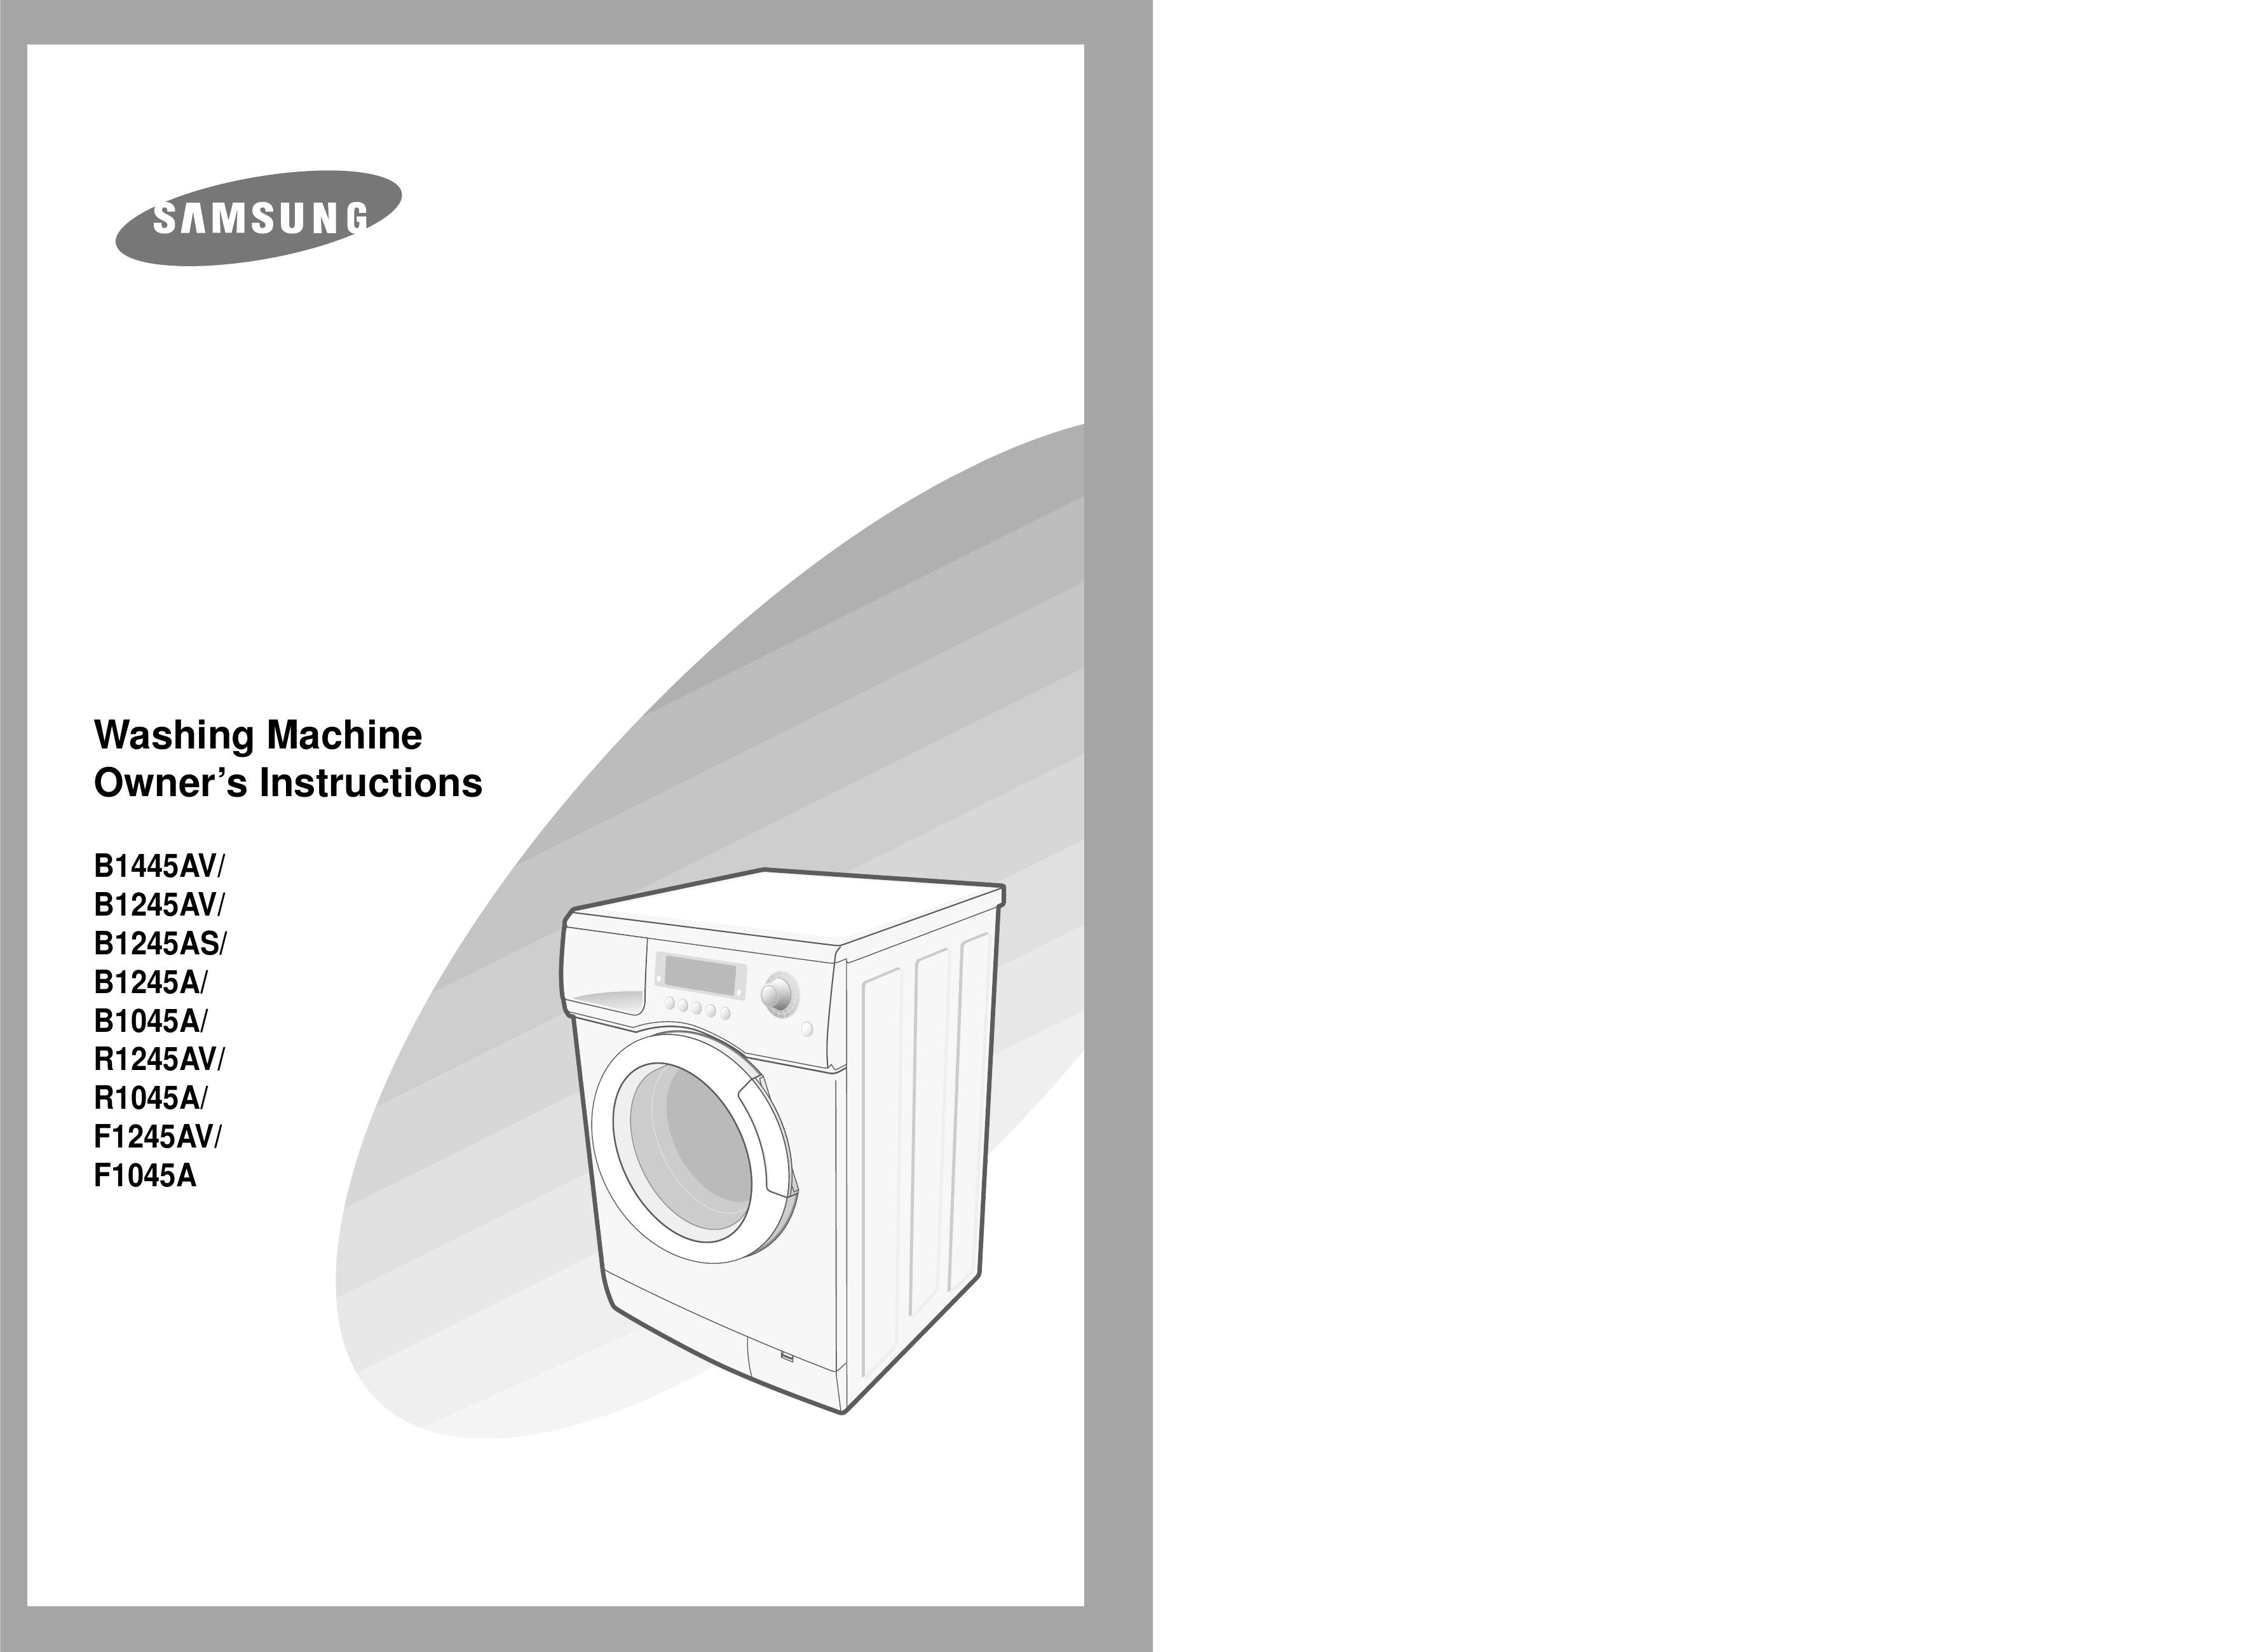 Samsung B1245AV Washer User Manual